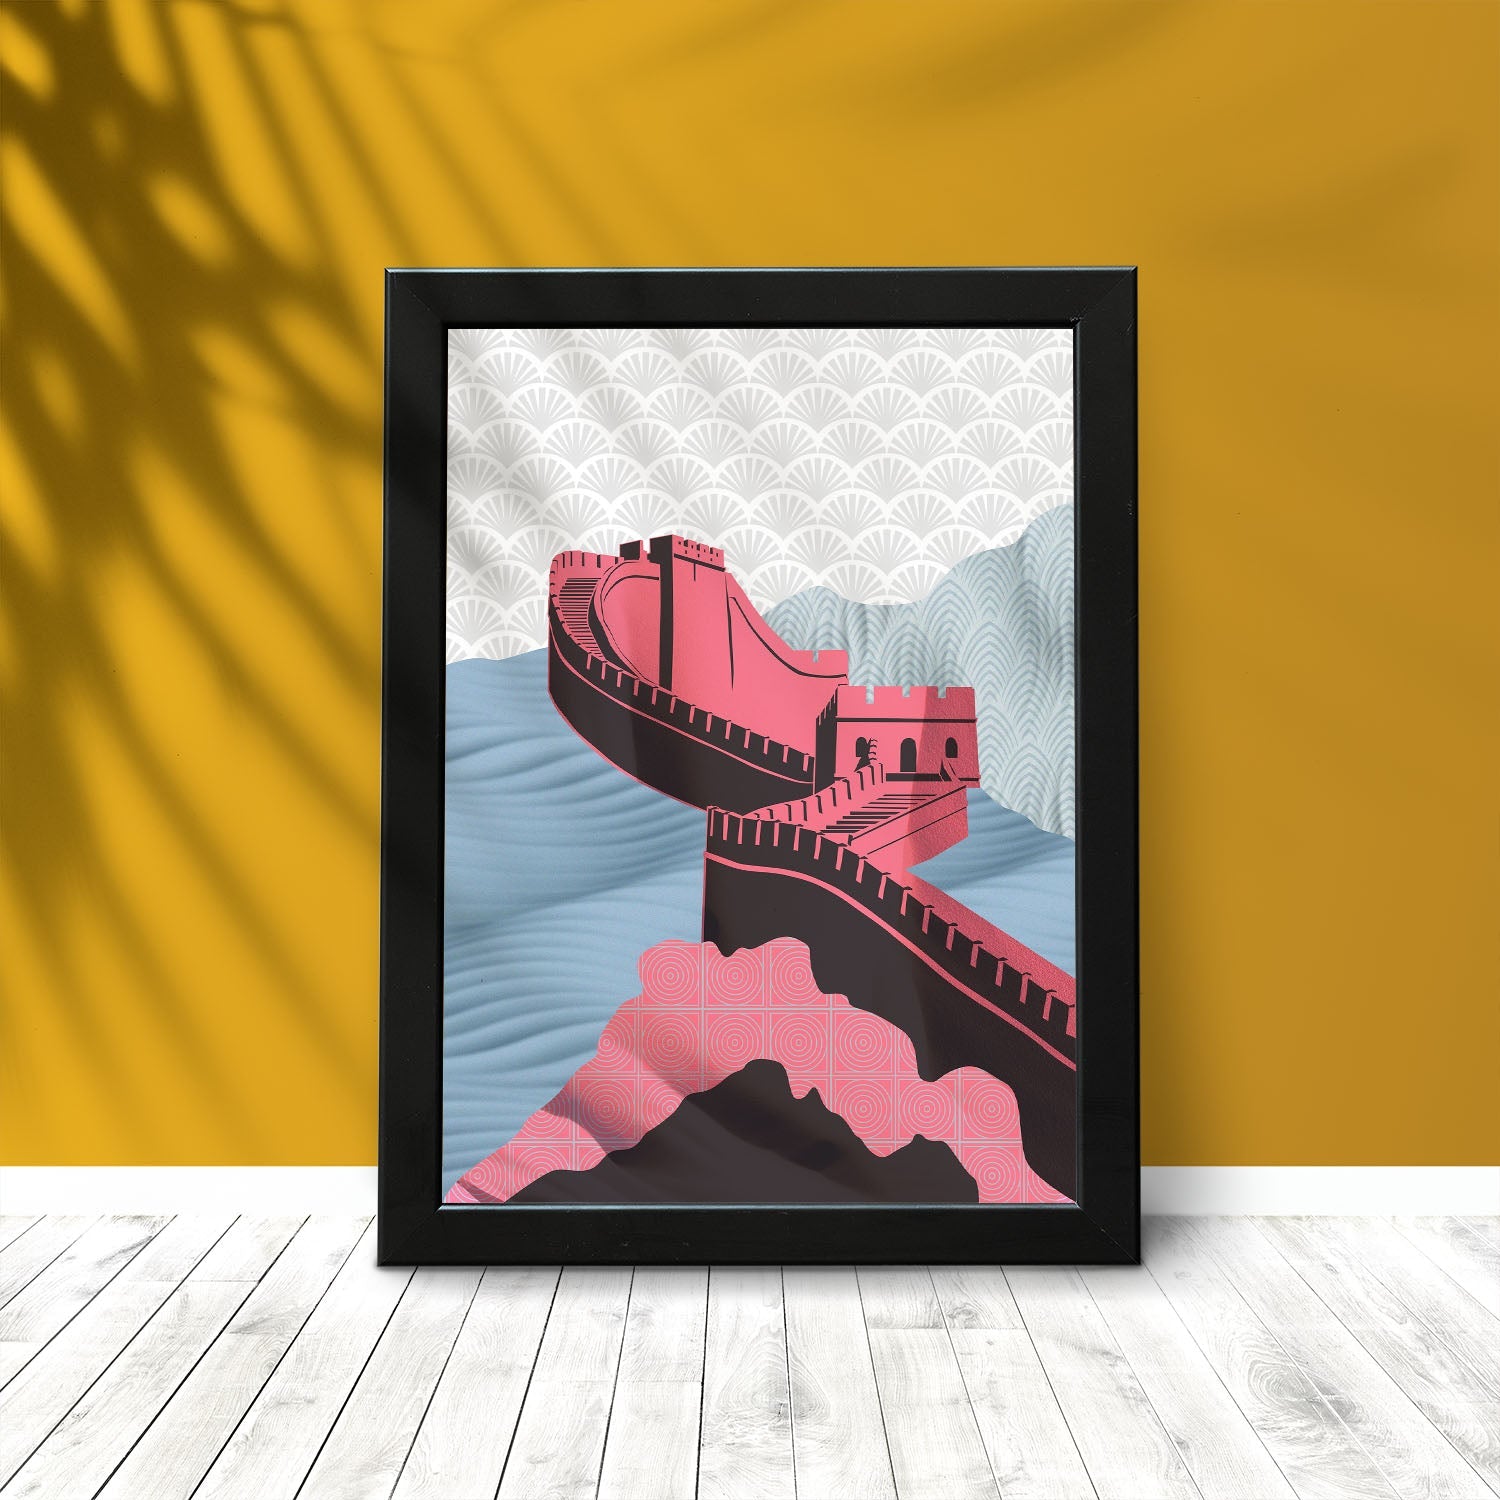 Great Wall of China-Artwork-Nacnic-Nacnic Estudio SL